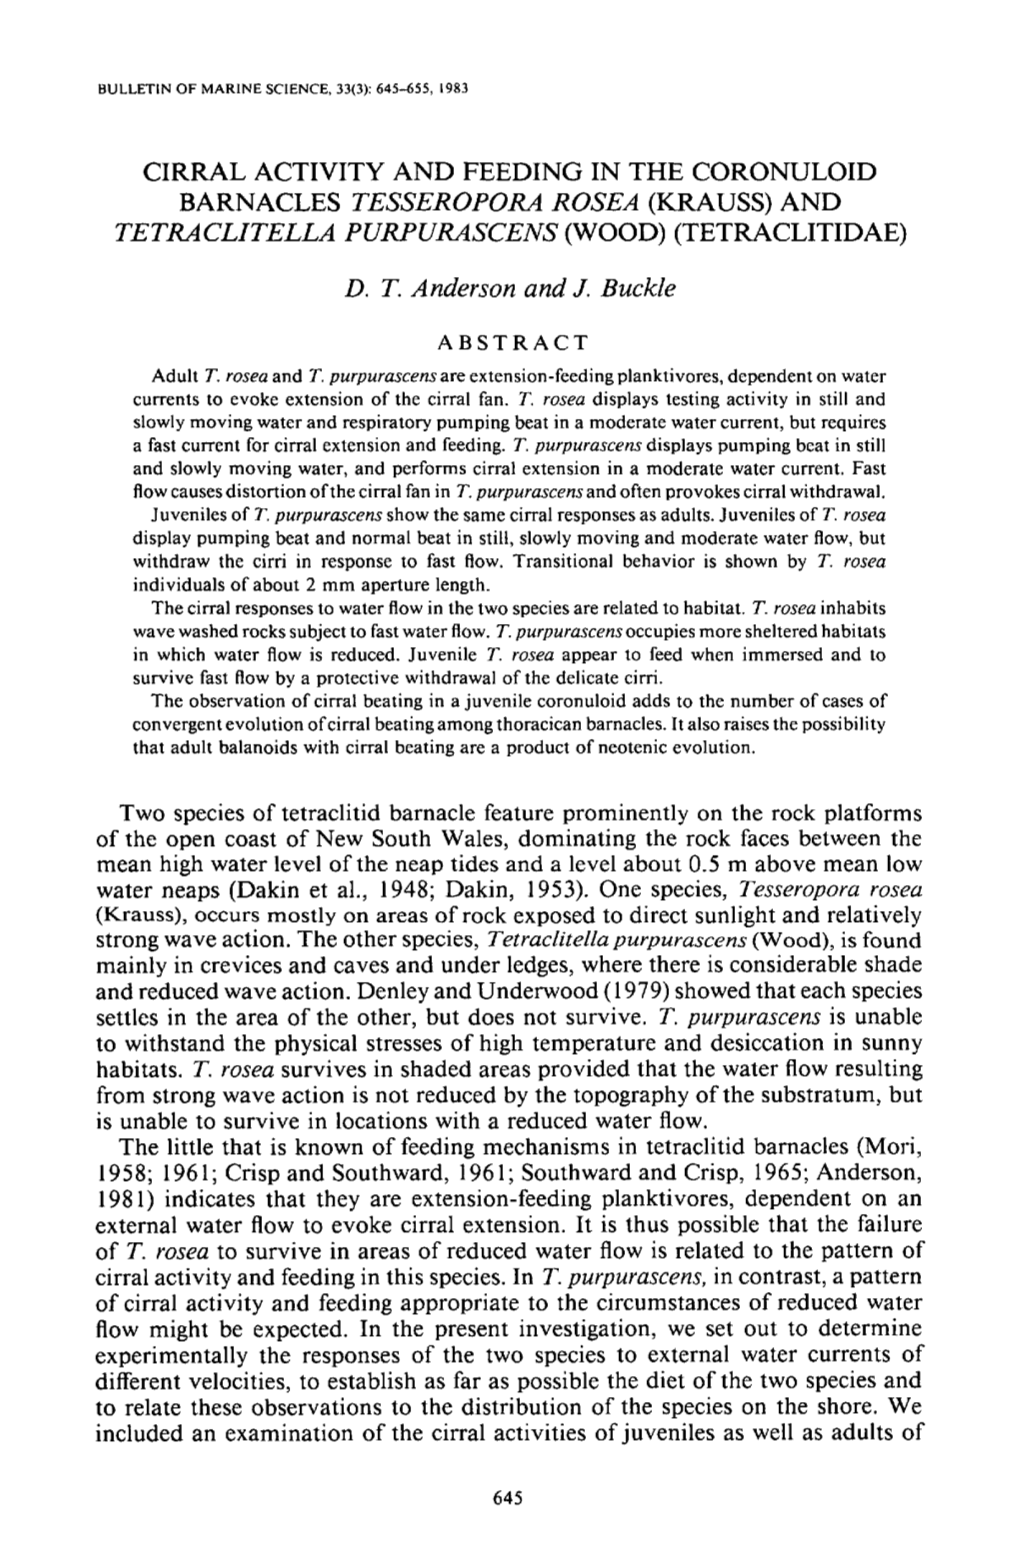 Cirral Activity and Feeding in the Coronuloid Barnacles Tesseropora Rosea (Krauss) and Tetraclitella Purpurascens (Wood) (Tetraclitidae)